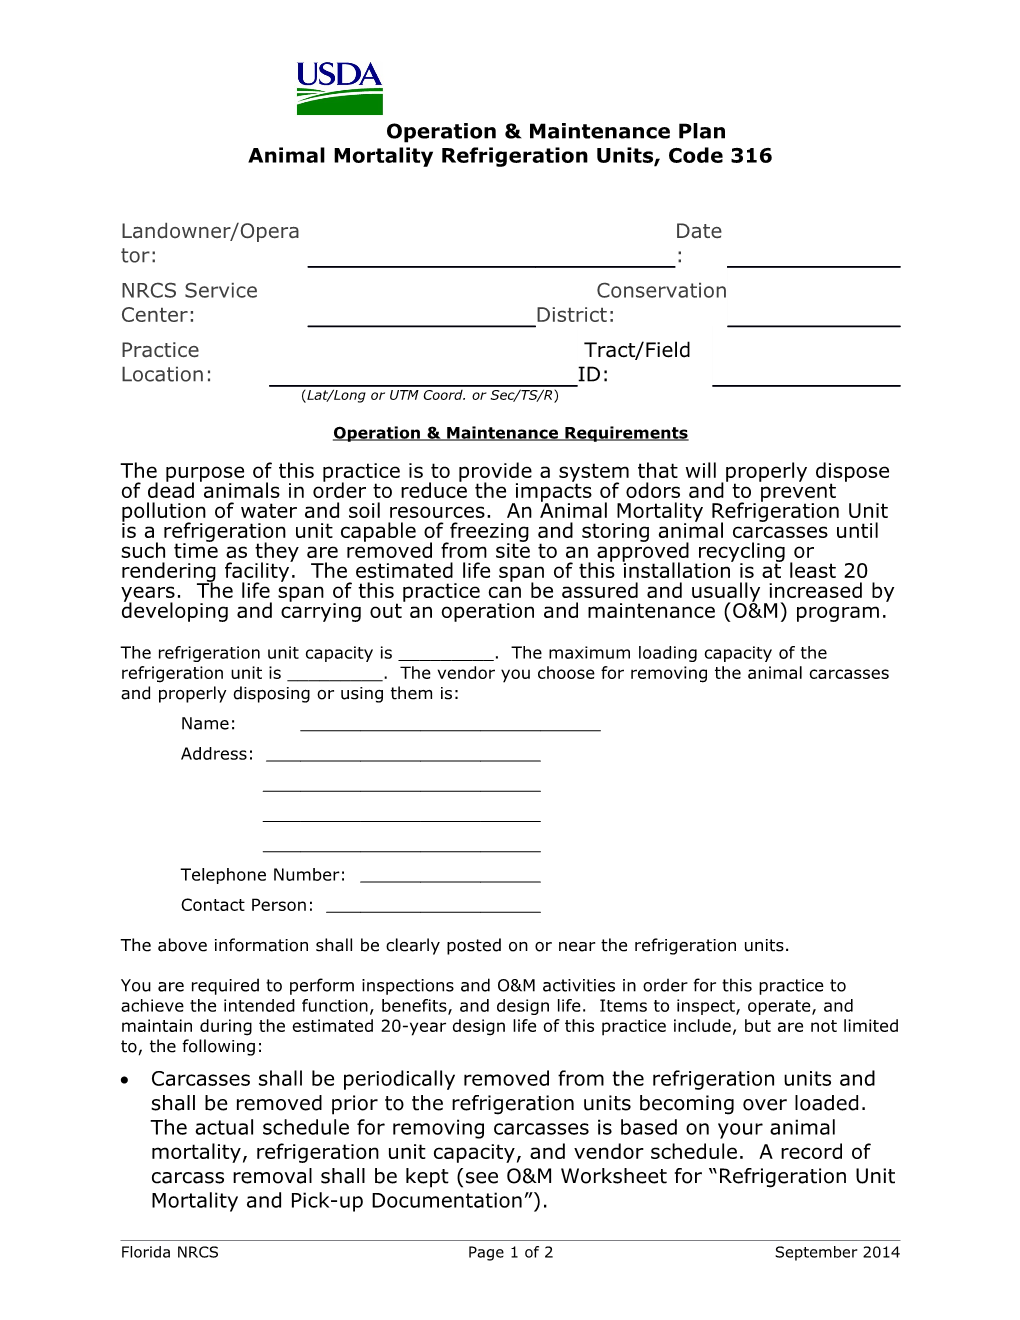 Operation and Maintenance Plan Animal Mortality Refrigeration Units, Code 316